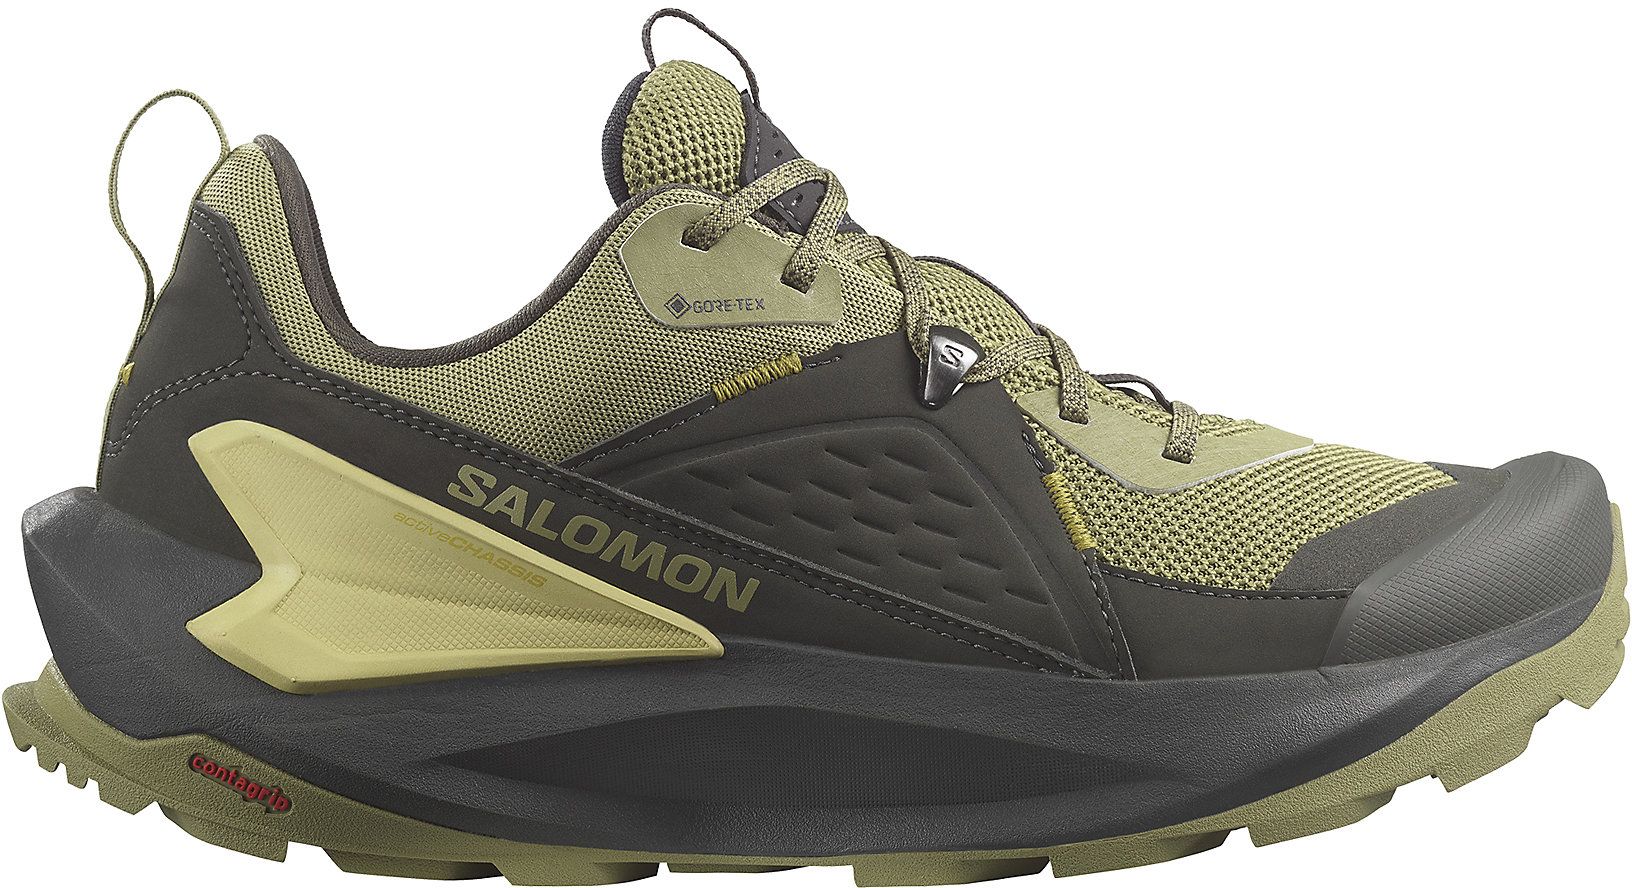 Photos - Trekking Shoes Salomon Men's Elixir GTX Shoe, Size 10, Black/Dried Herb/Southern 23SALMLX 